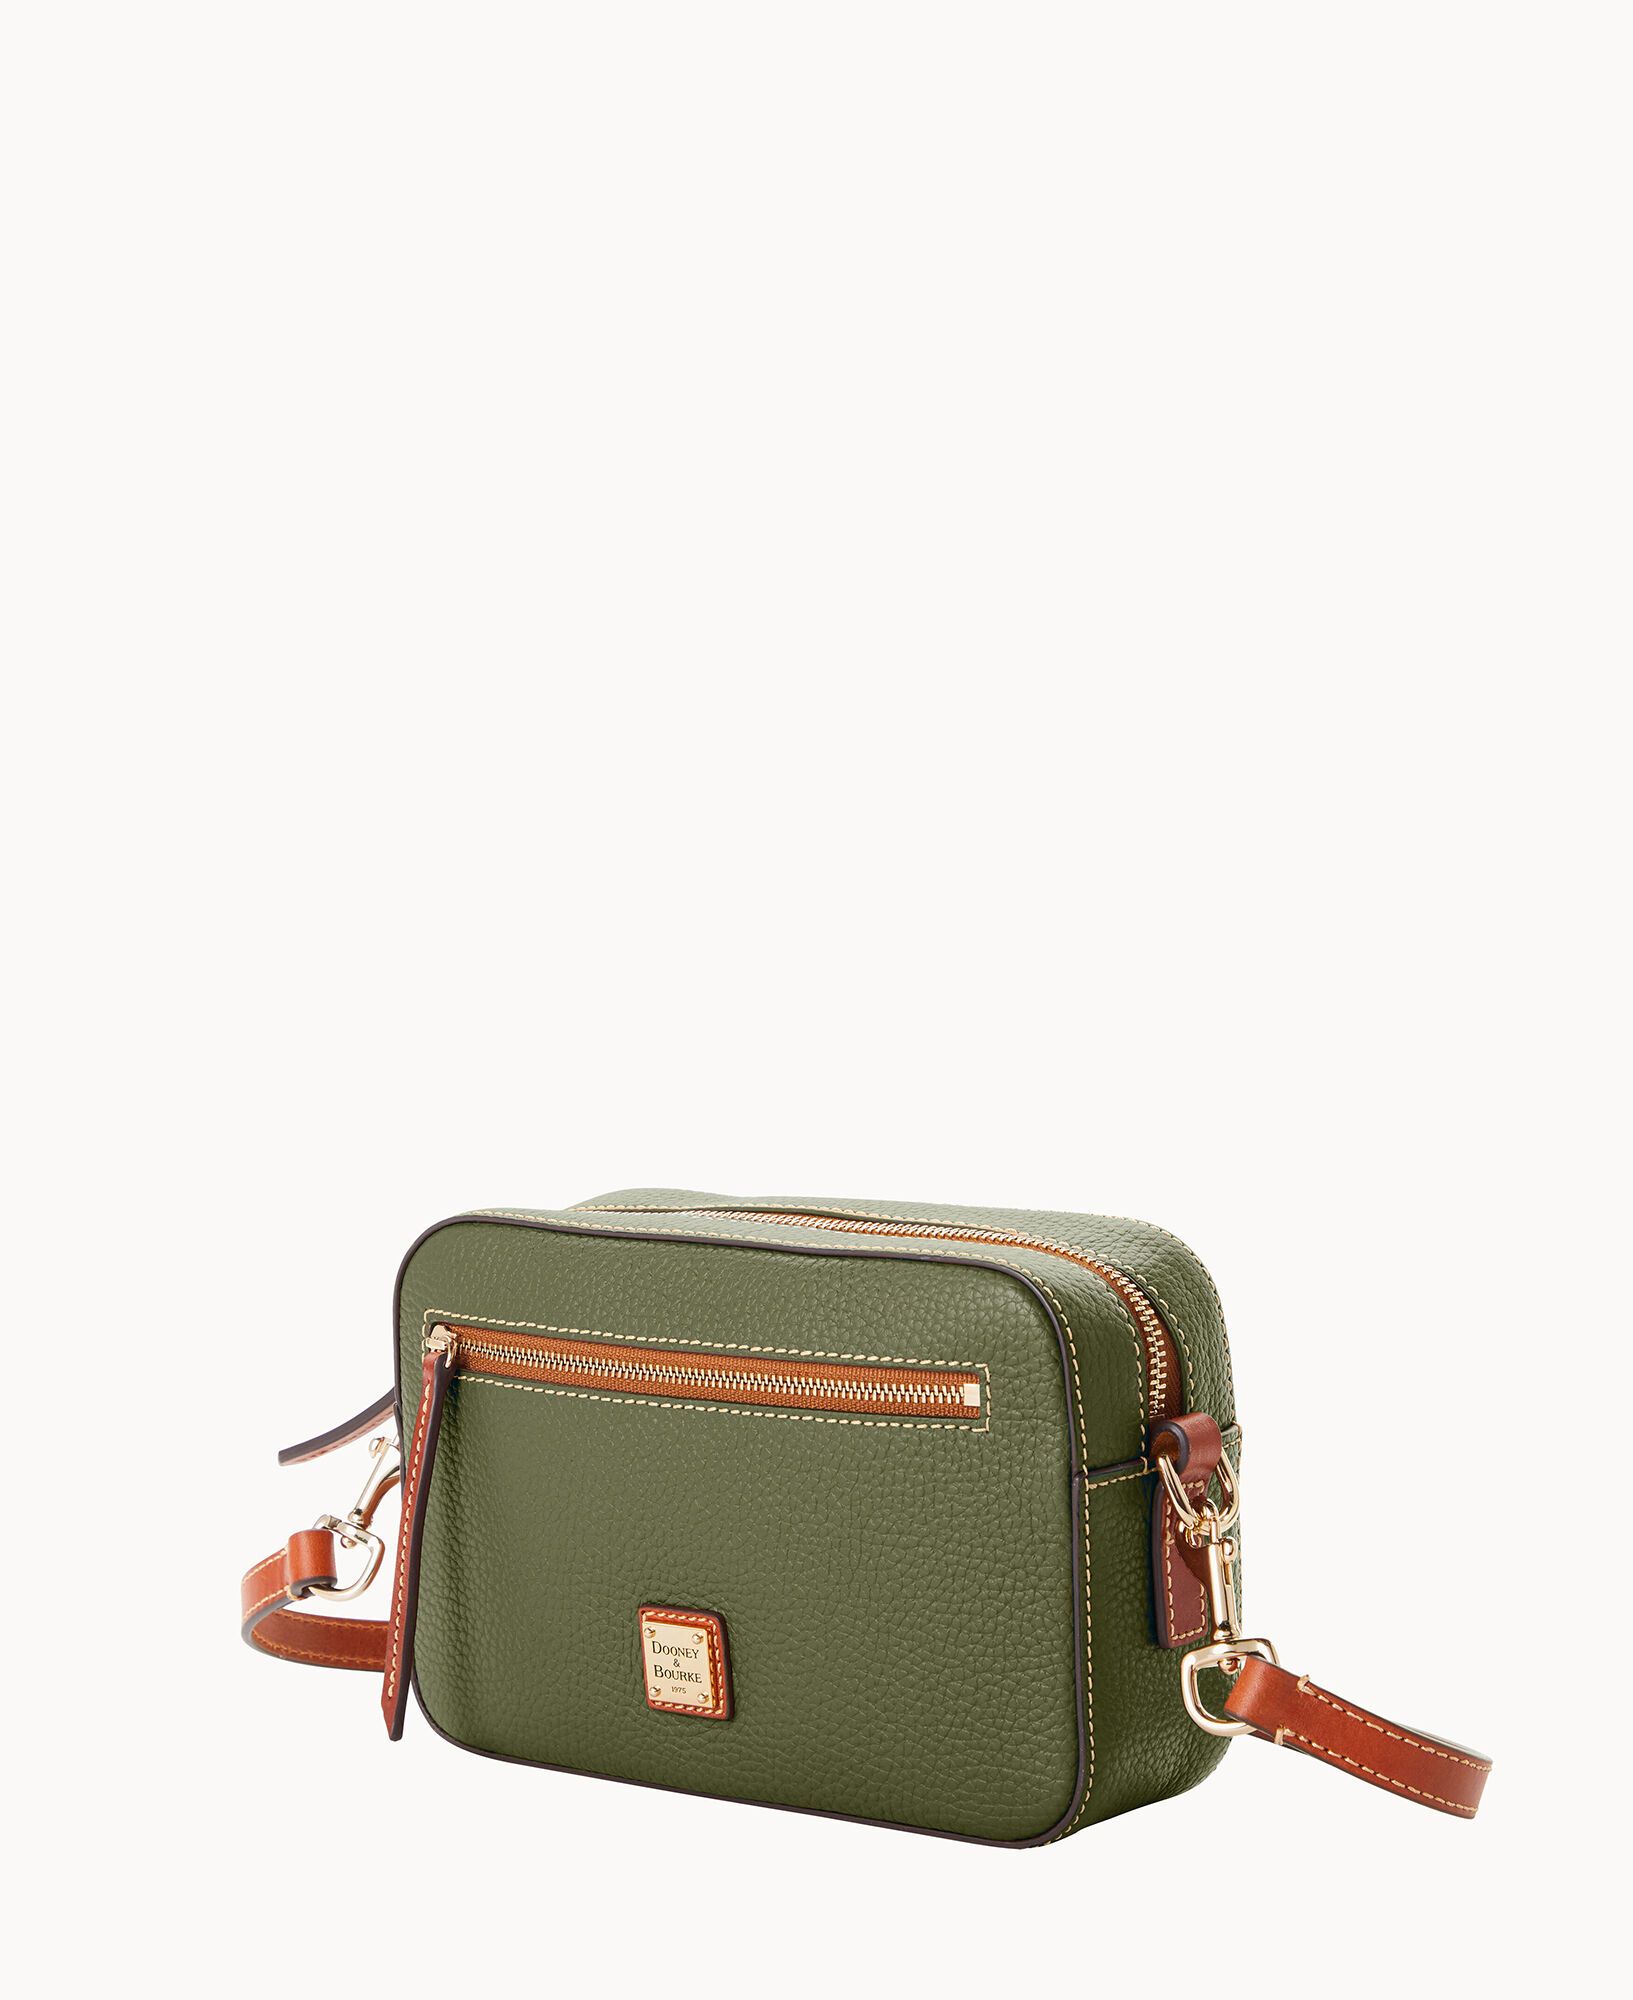 Dooney & Bourke - Pebble Leather Camera Crossbody Bag Purse Green